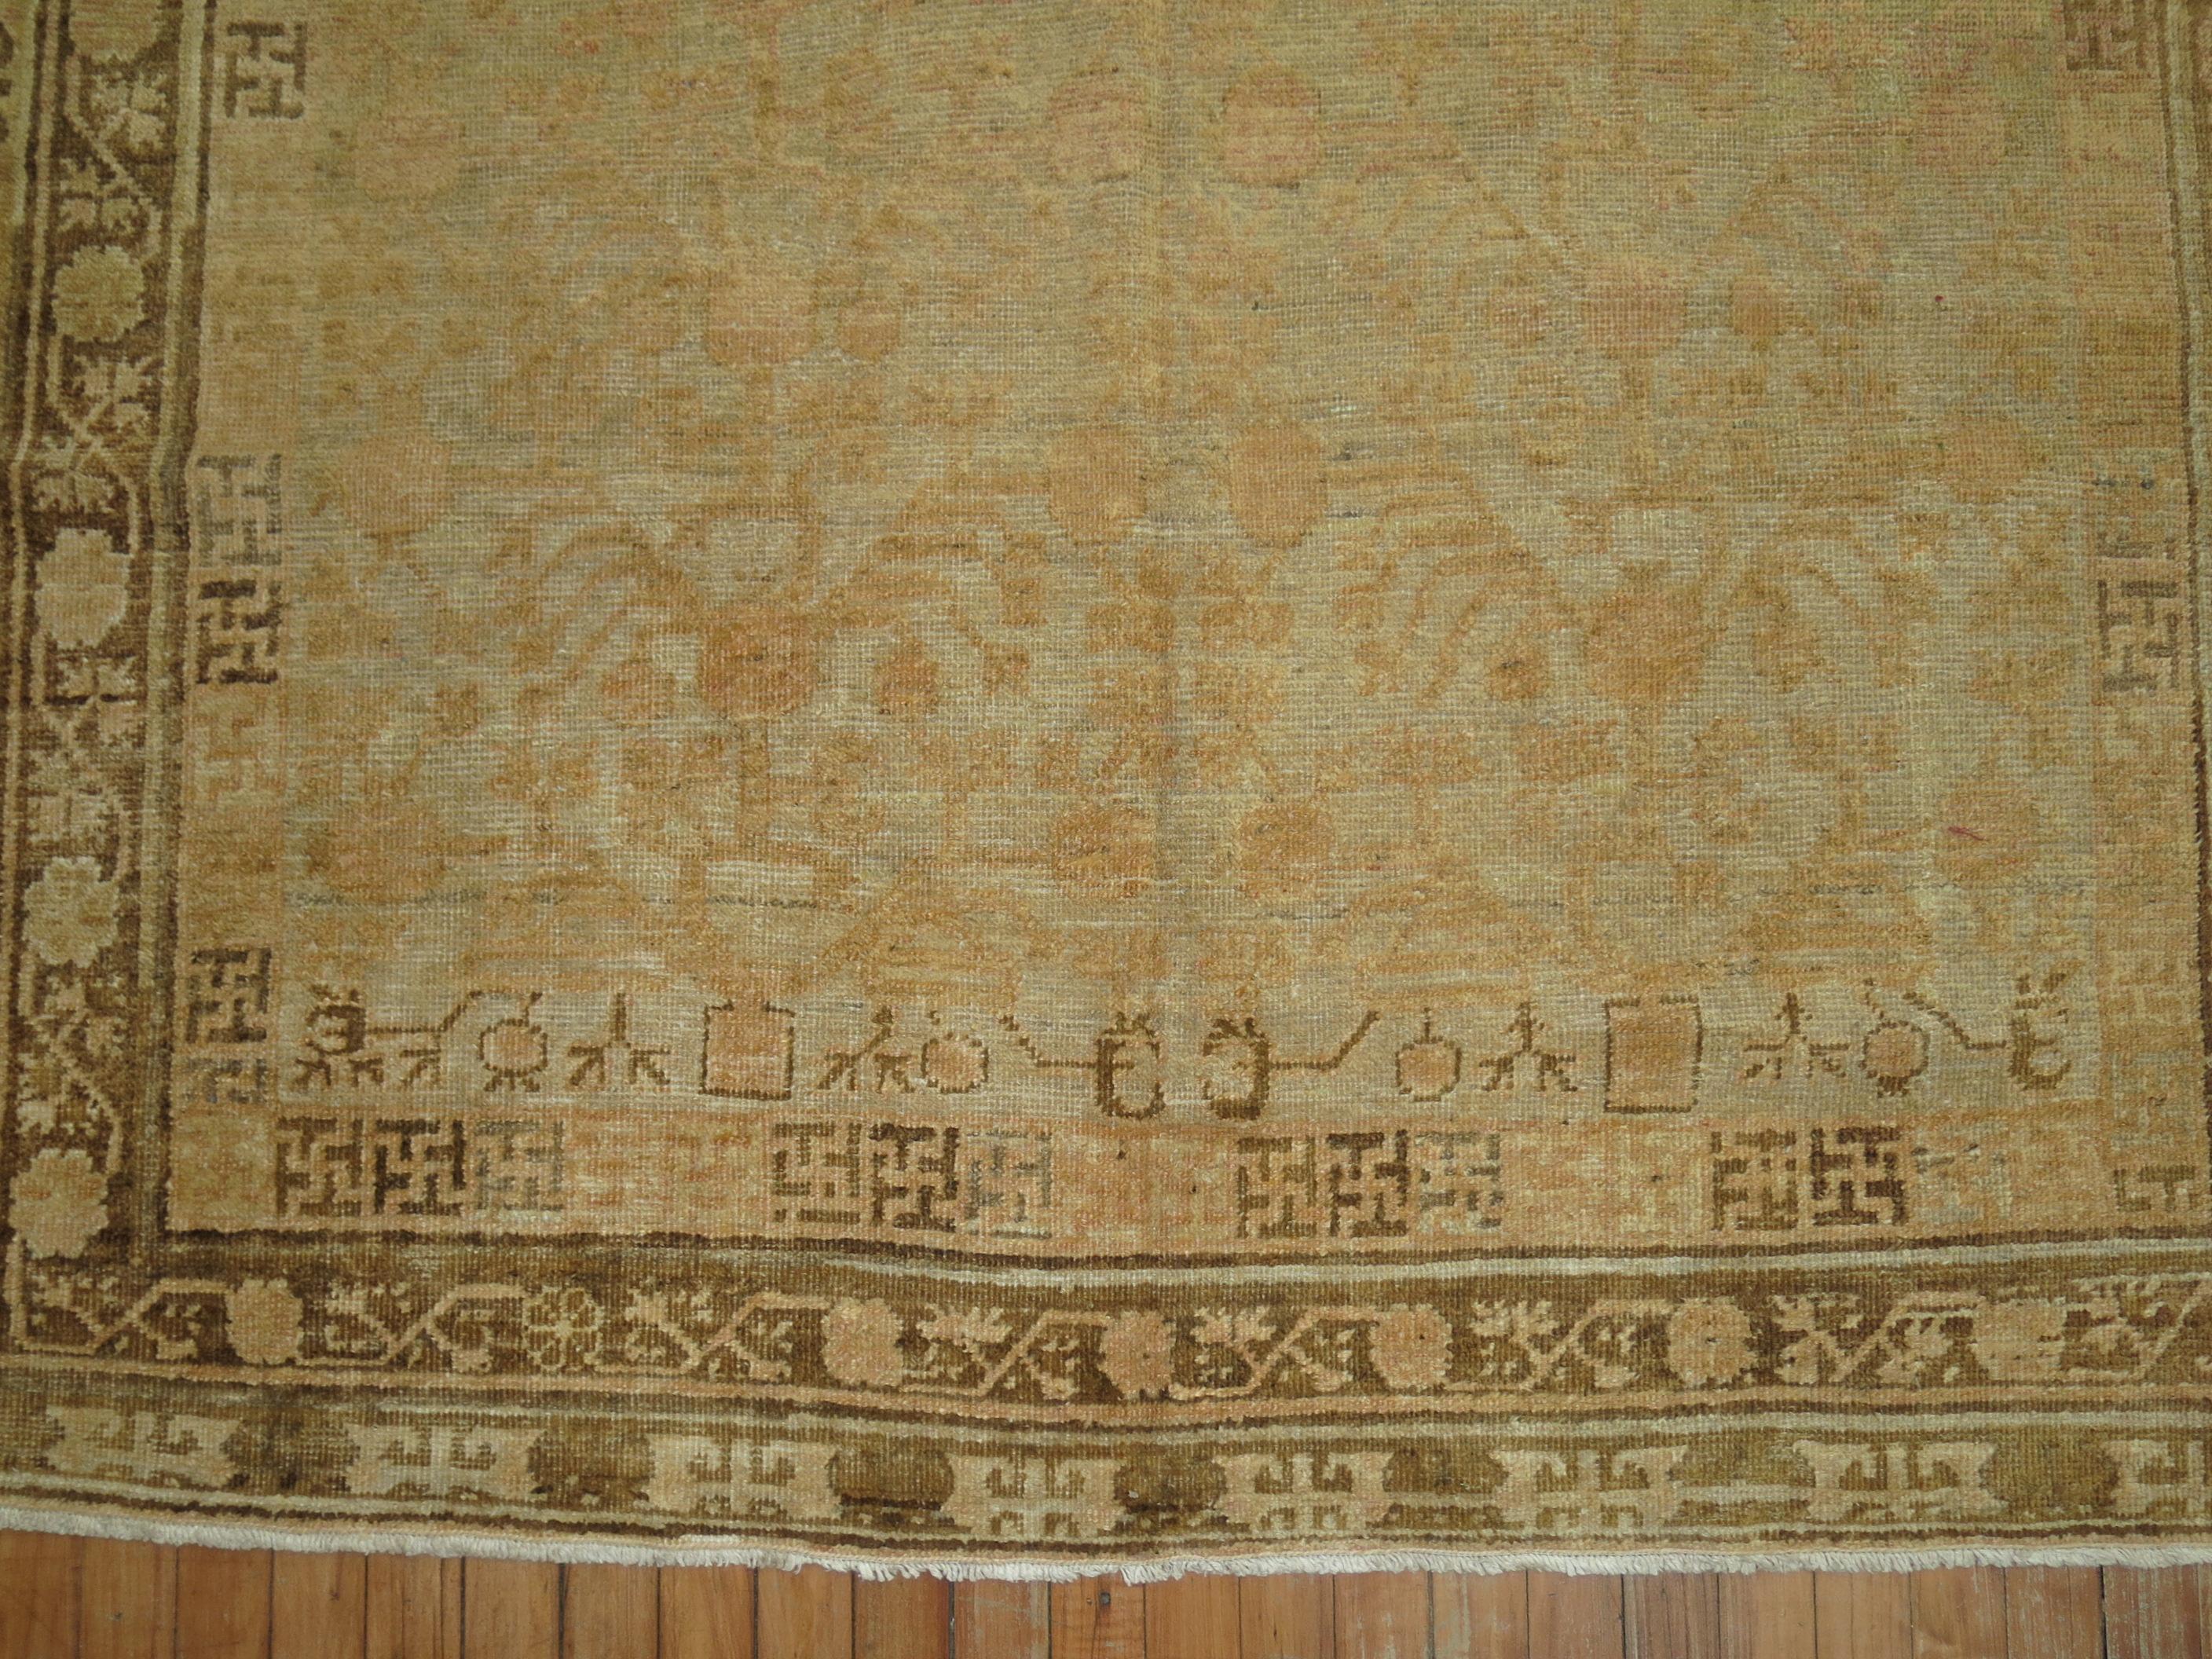 Kinetic Khotan Carpet in Pale Colors